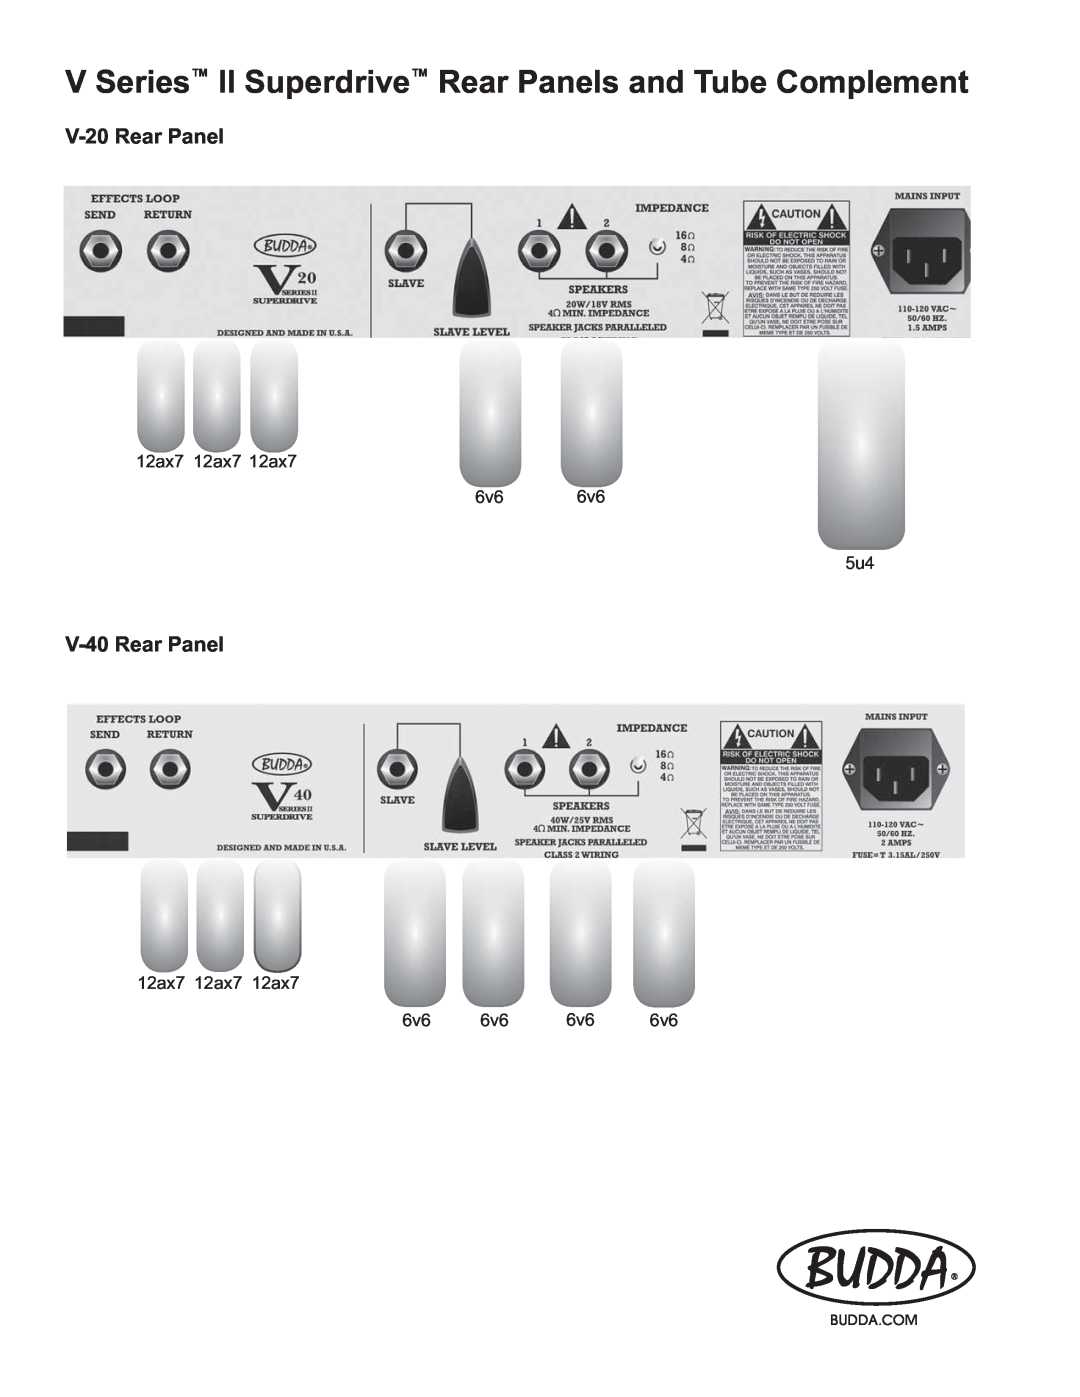 Budda HEAD V-20 Rear Panel, V-40 Rear Panel, V Series II Superdrive Rear Panels and Tube Complement, 12ax7 12ax7 12ax7 